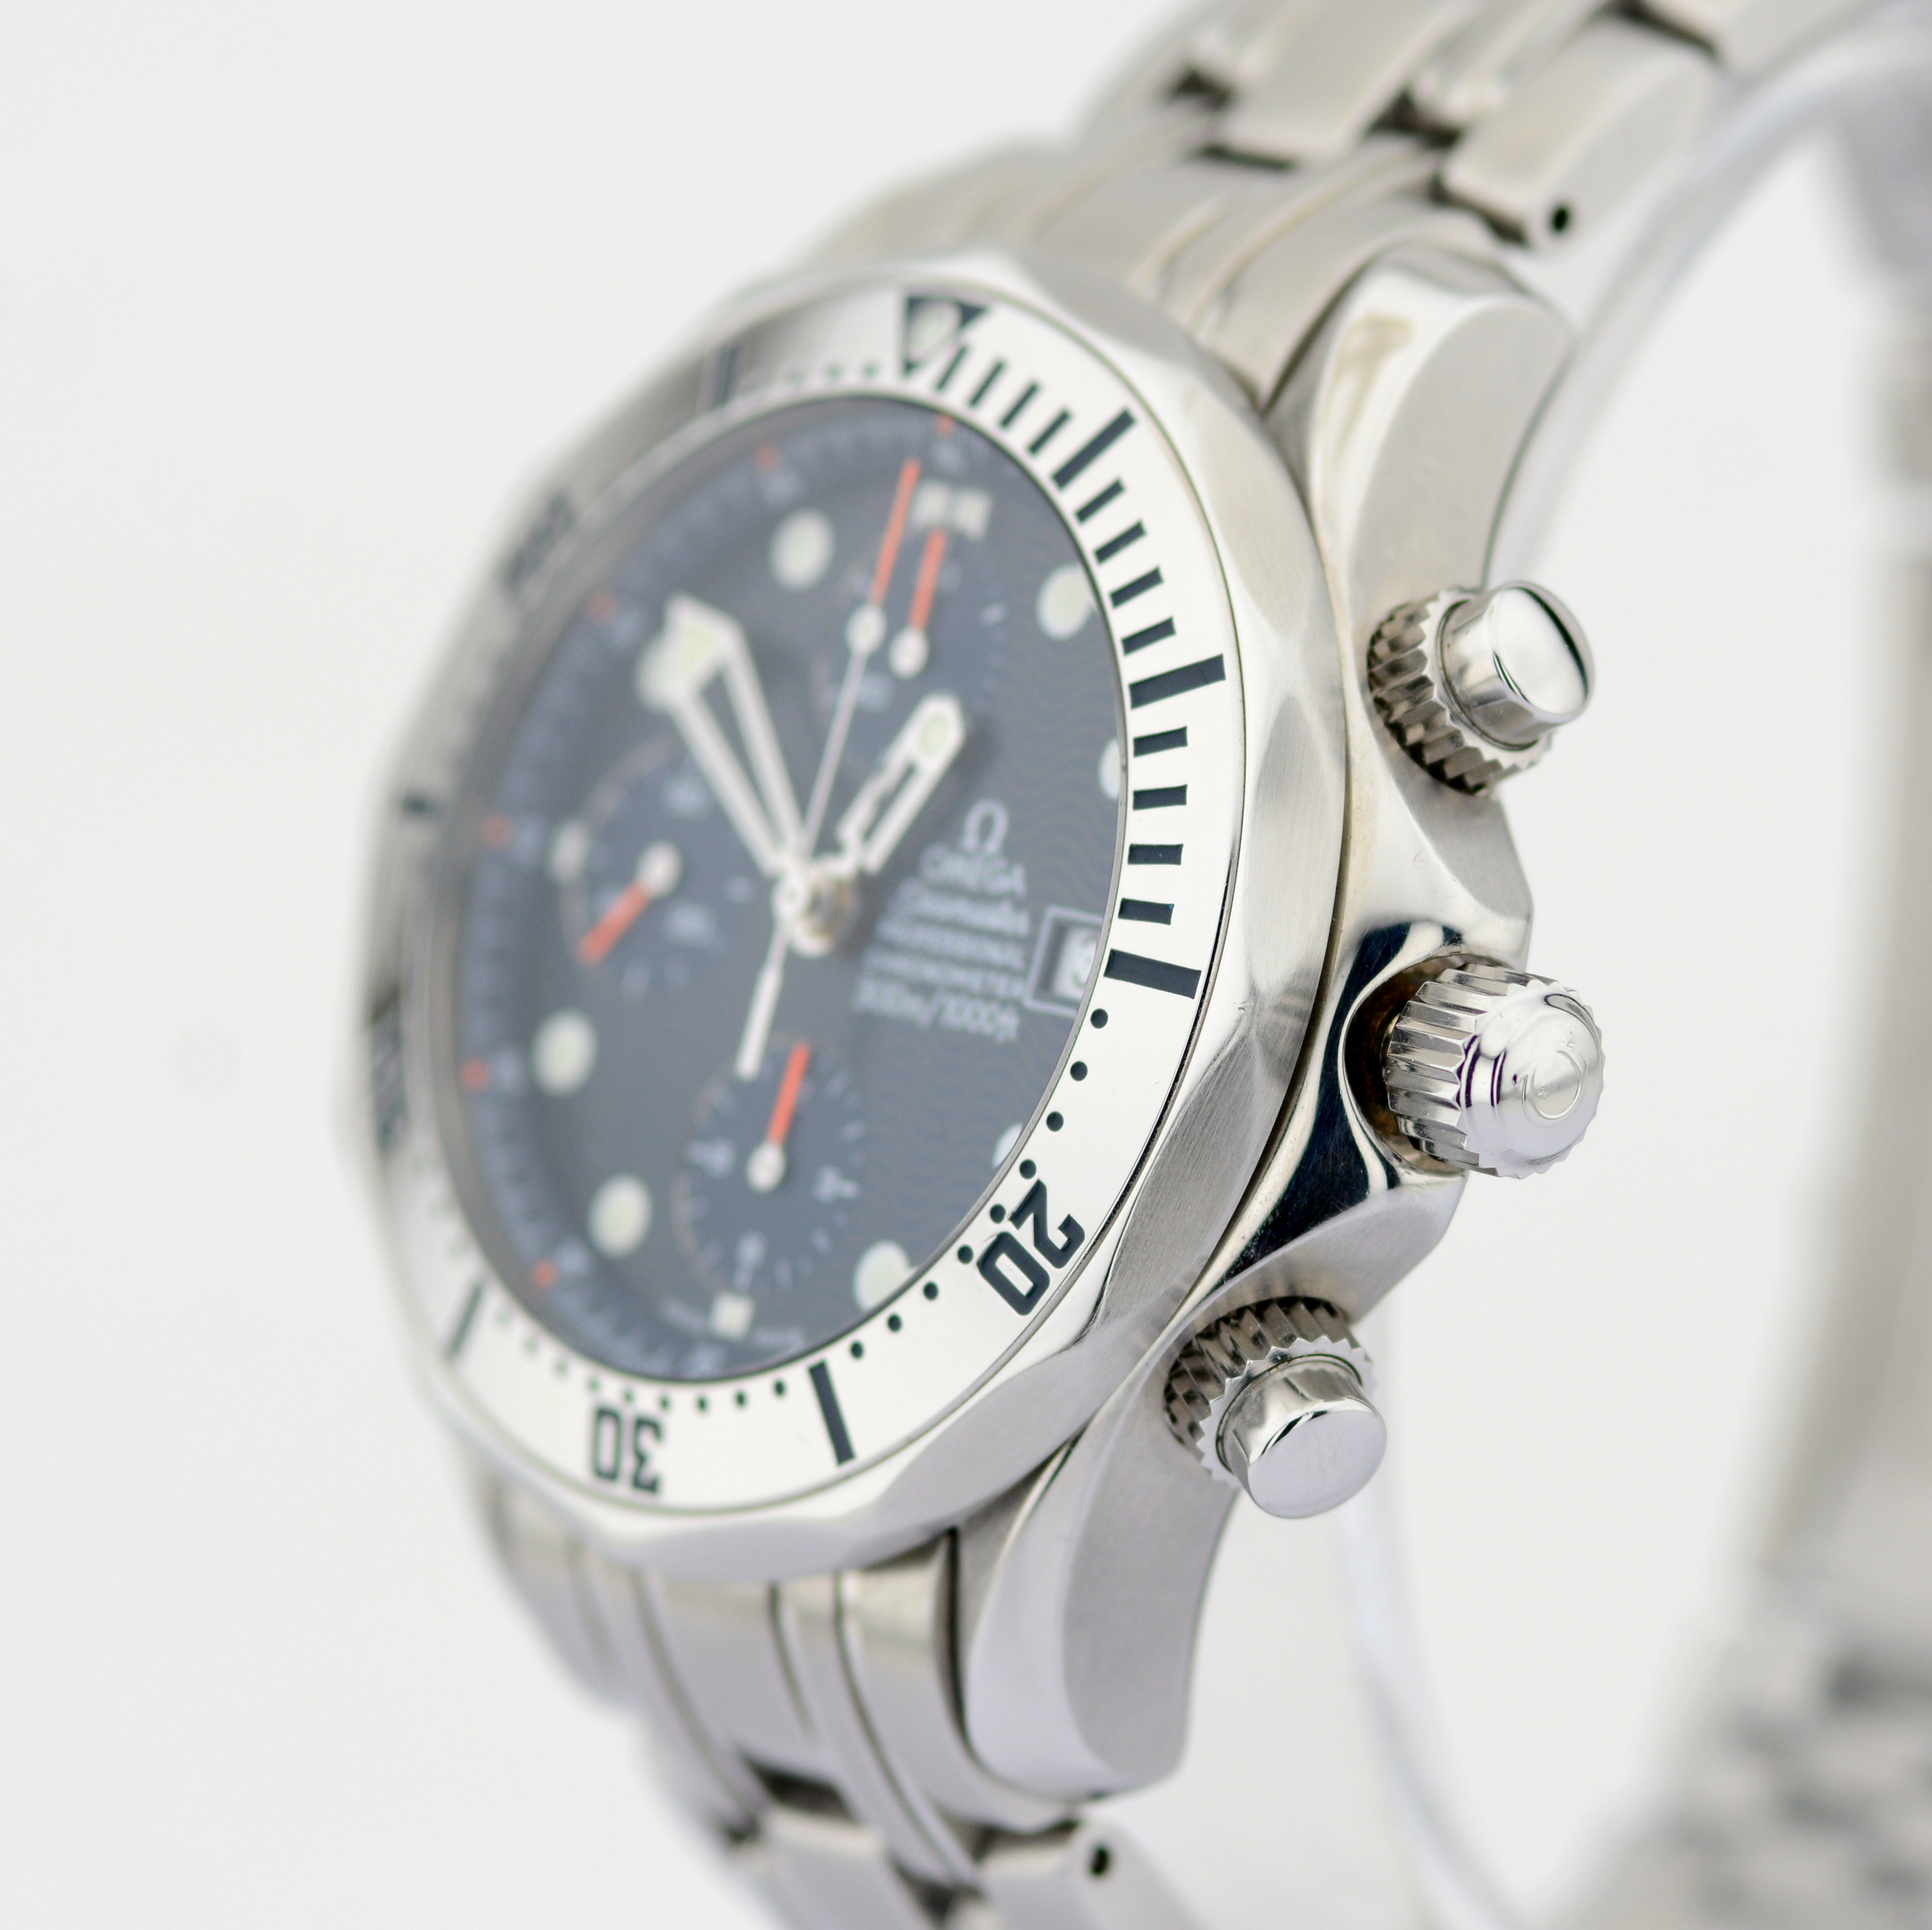 Omega / Seamaster Professional Chronemeter 178.0514 Chronograph - Gentlmen's Steel Wrist Watch - Image 4 of 12